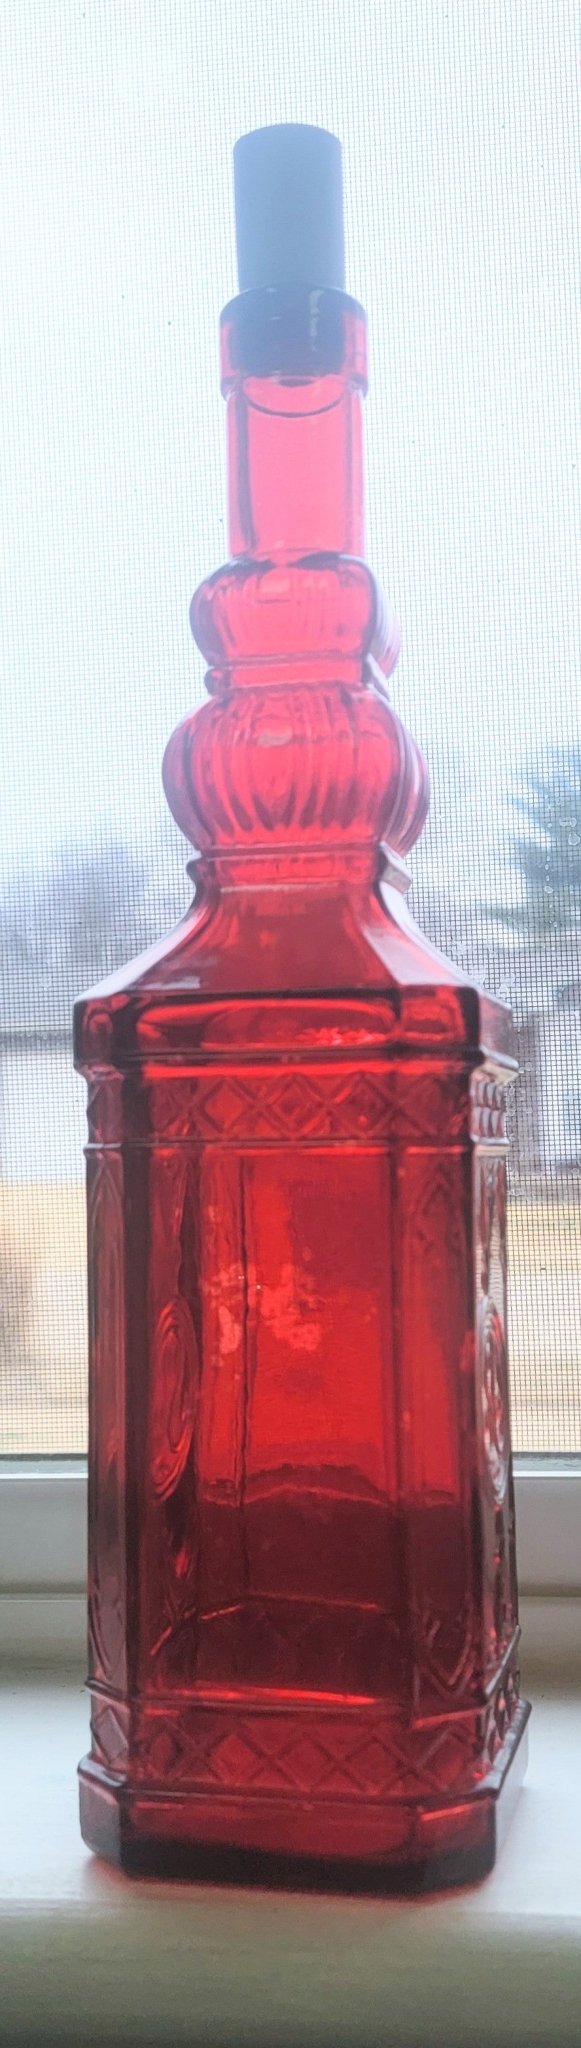 Avon Strawberry Glass Bottle - Smash's Stashes